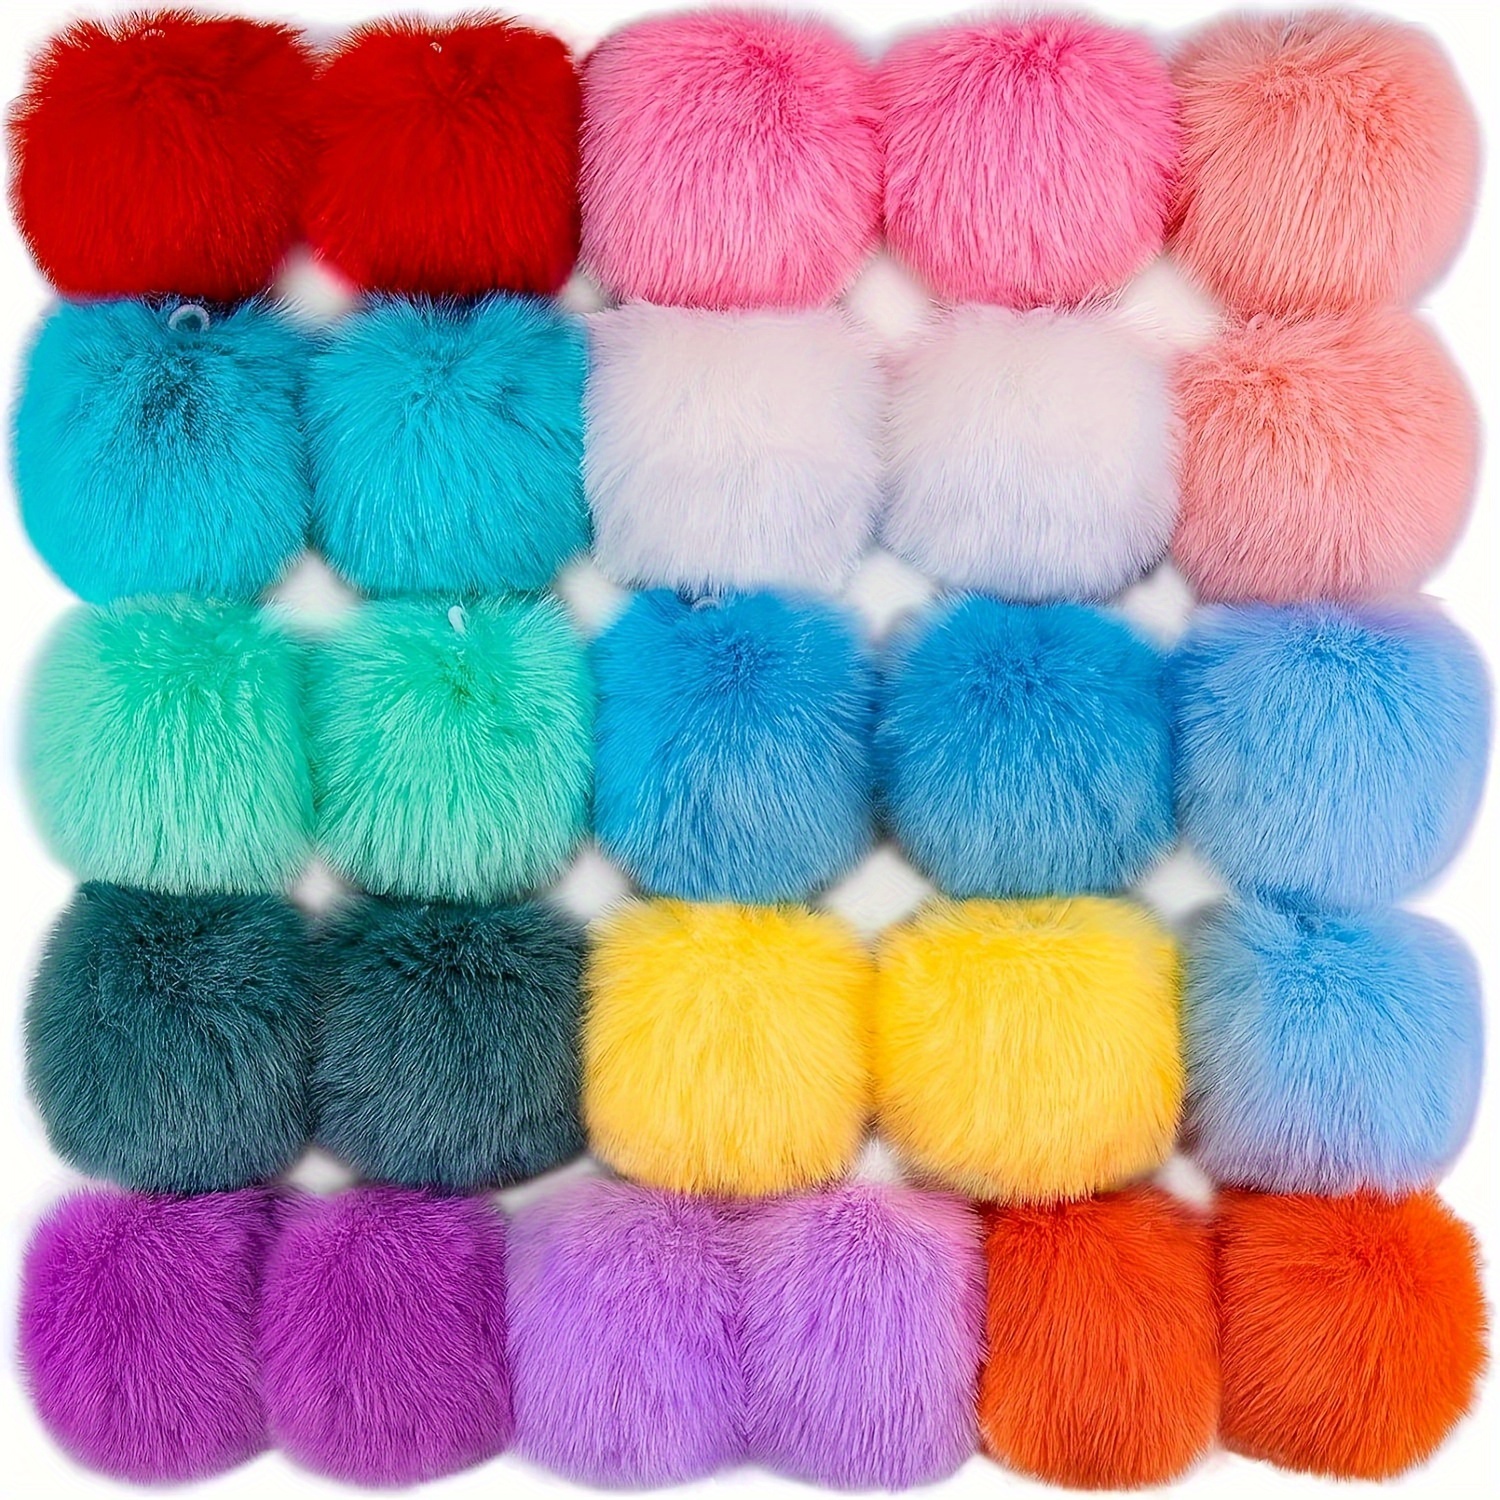 

26 Pcs Faux Rabbit Fur Pom Poms With Elastic Rings Diy Fluffy Pom Poms For Hats Beanie Shoes Scarves Gloves Bag Accessories (13 Colors, 2 Pcs Each Color) Craft Ornaments